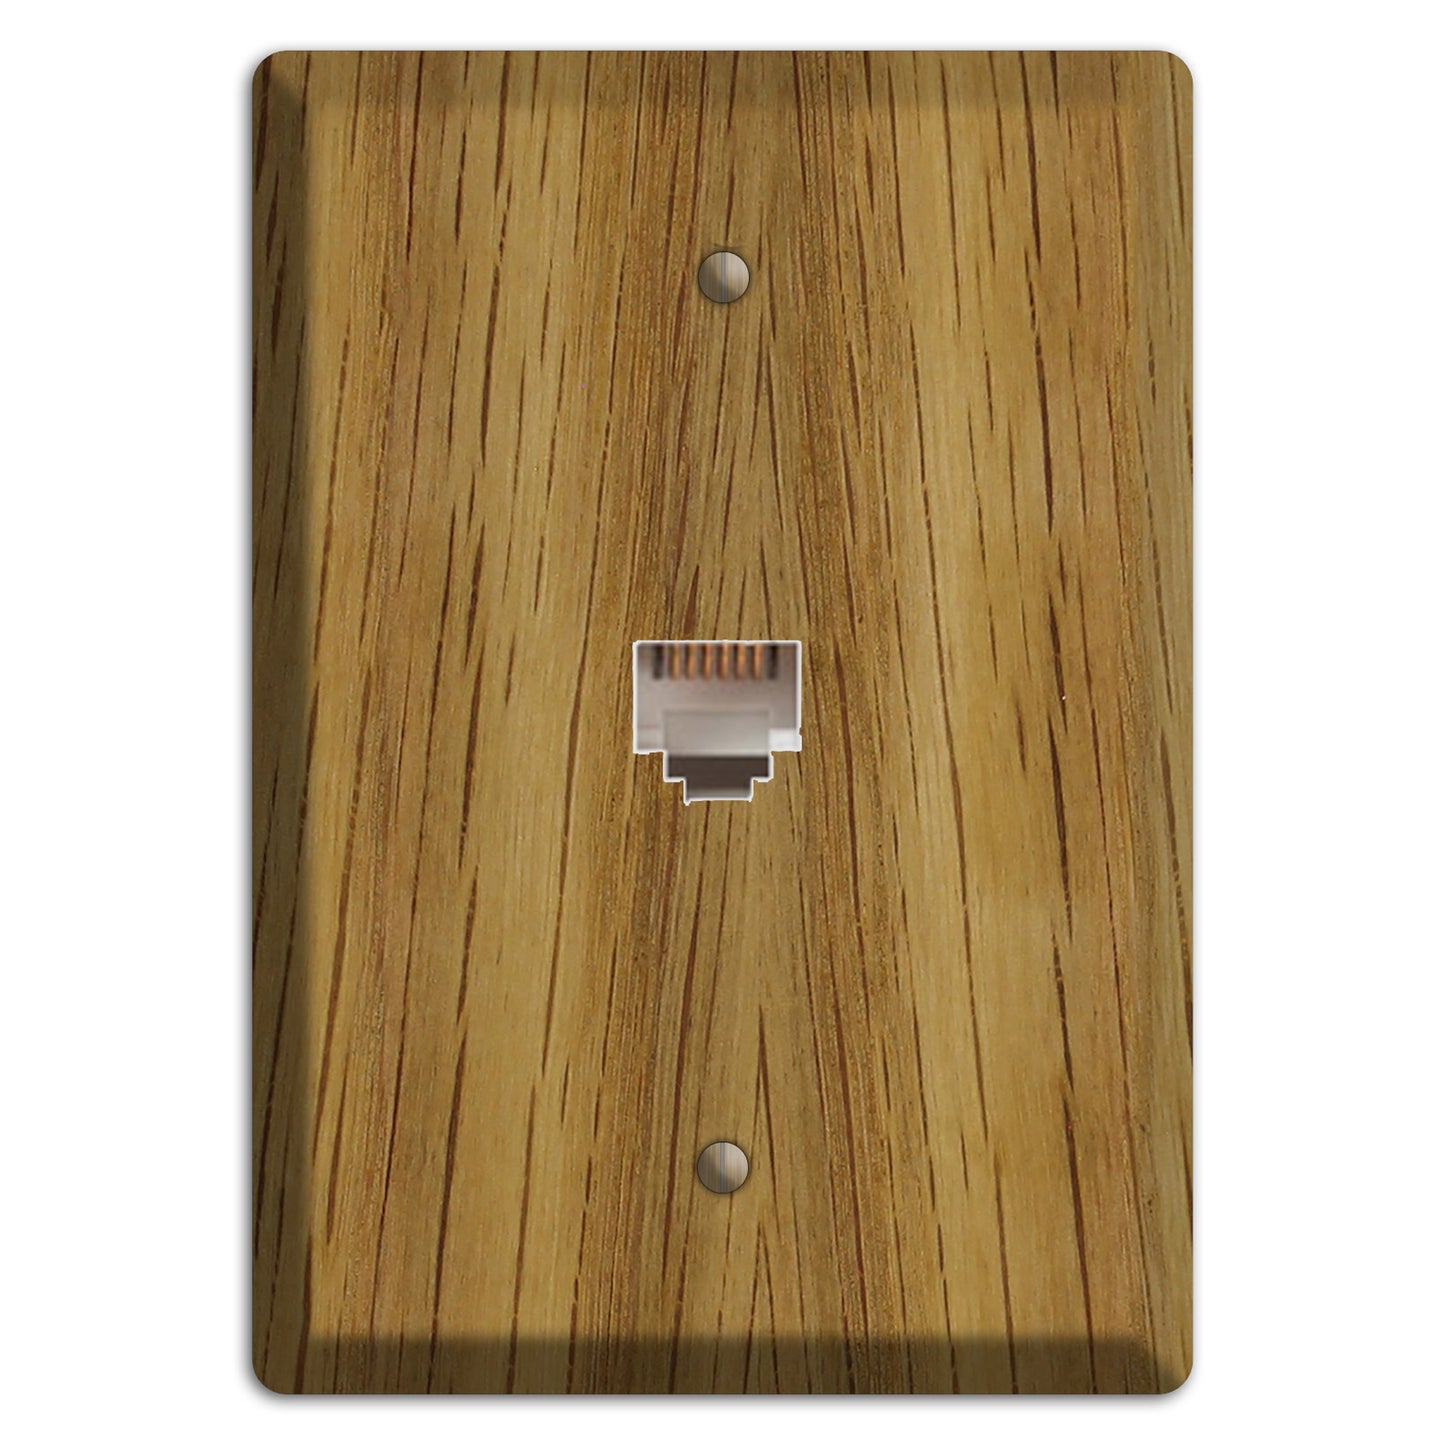 Unfinished White Oak Wood Phone Hardware with Plate